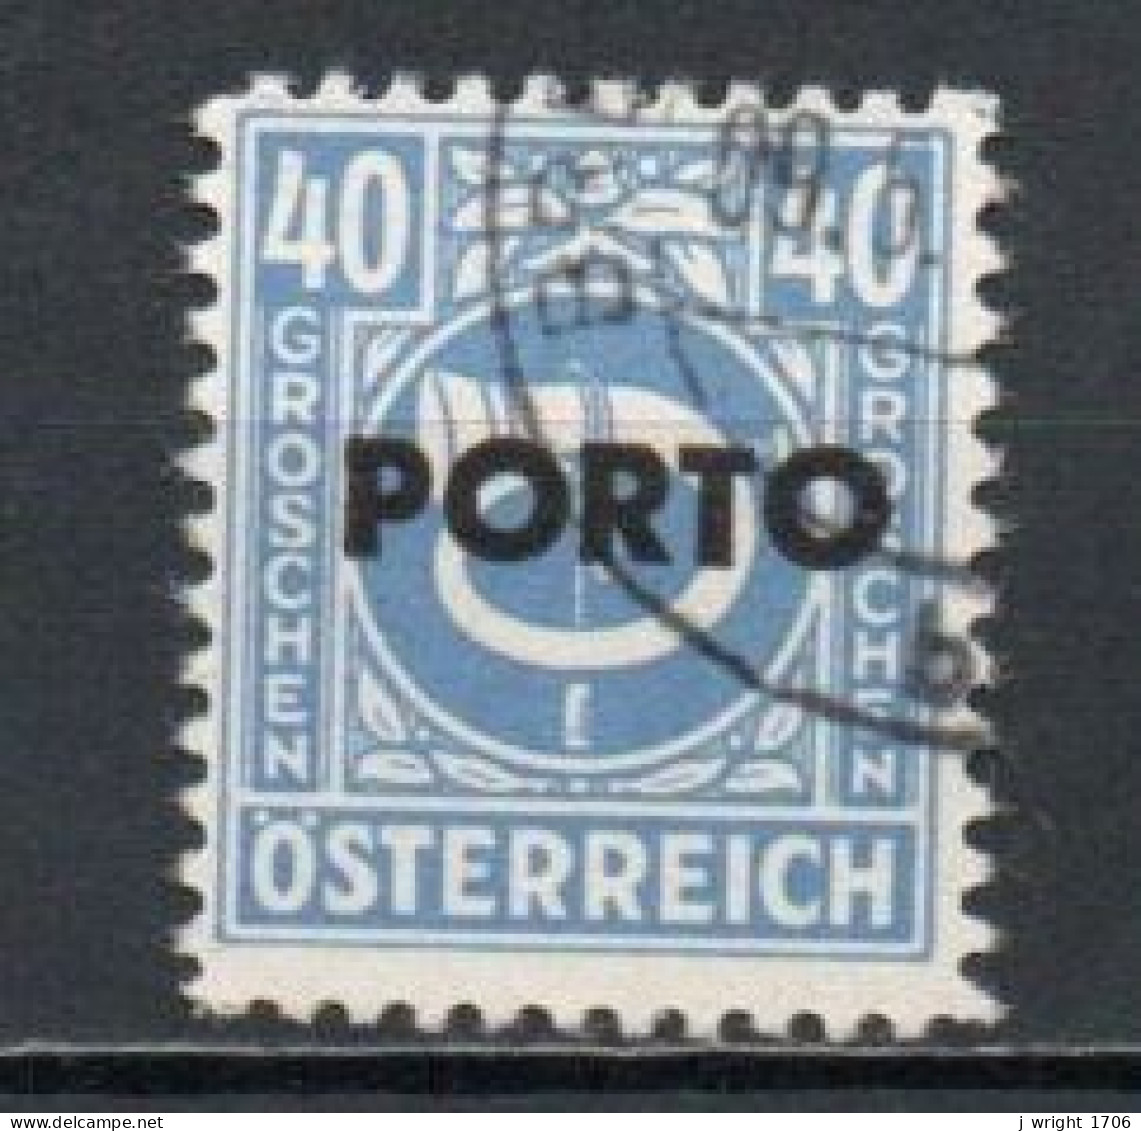 Austria, 1946, Posthorn Overprinted, 40g, CTO - Taxe